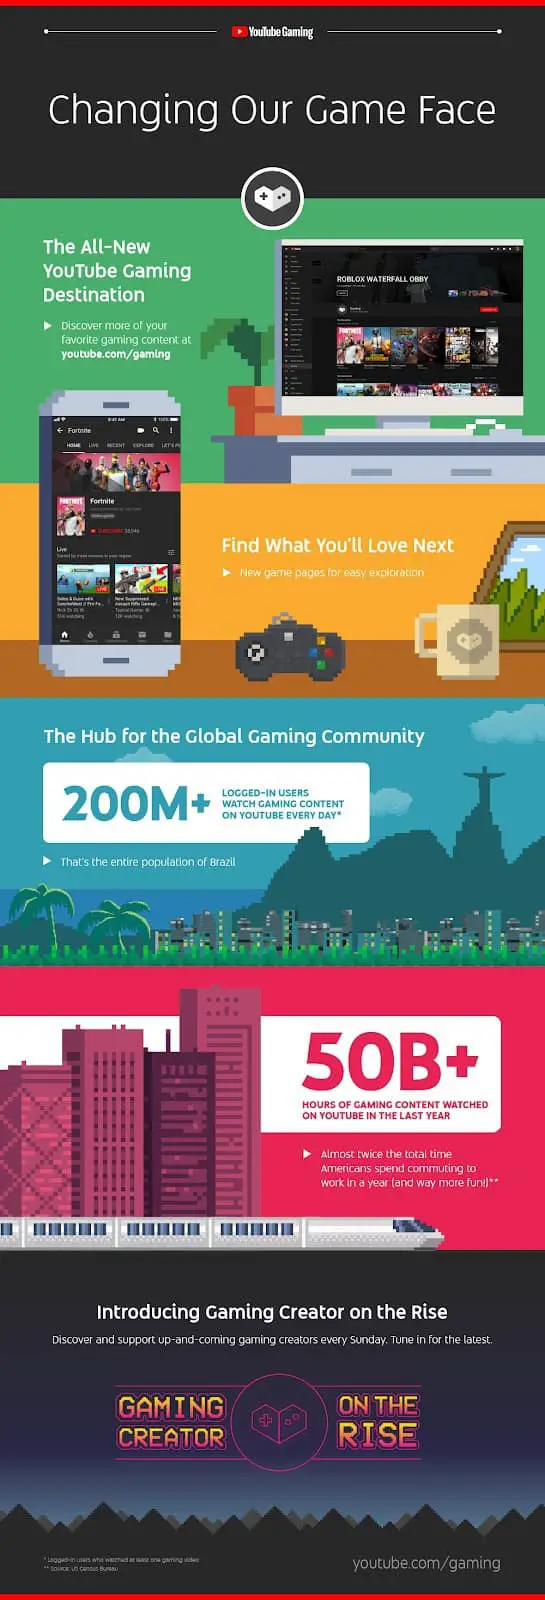 YT_Gaming_Infographic_17Sept_EN-US